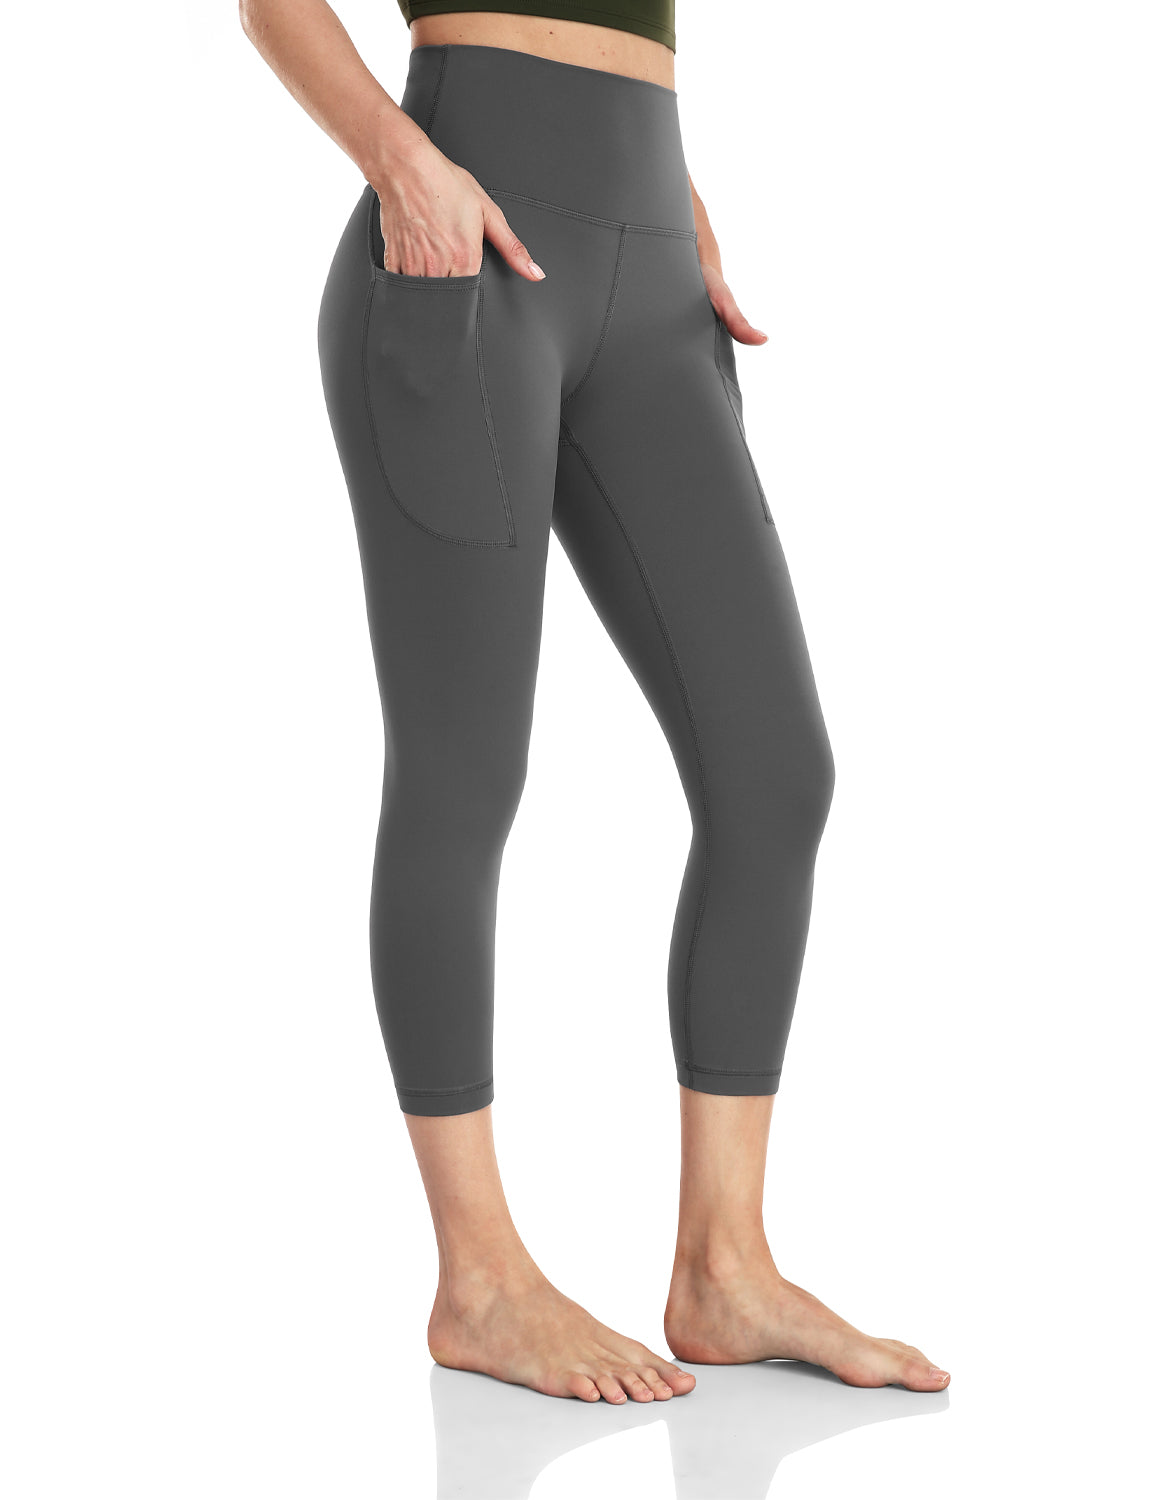 HeyNuts Essential 7/8 Leggings, High Waisted Pants Athletic Yoga Pants 25